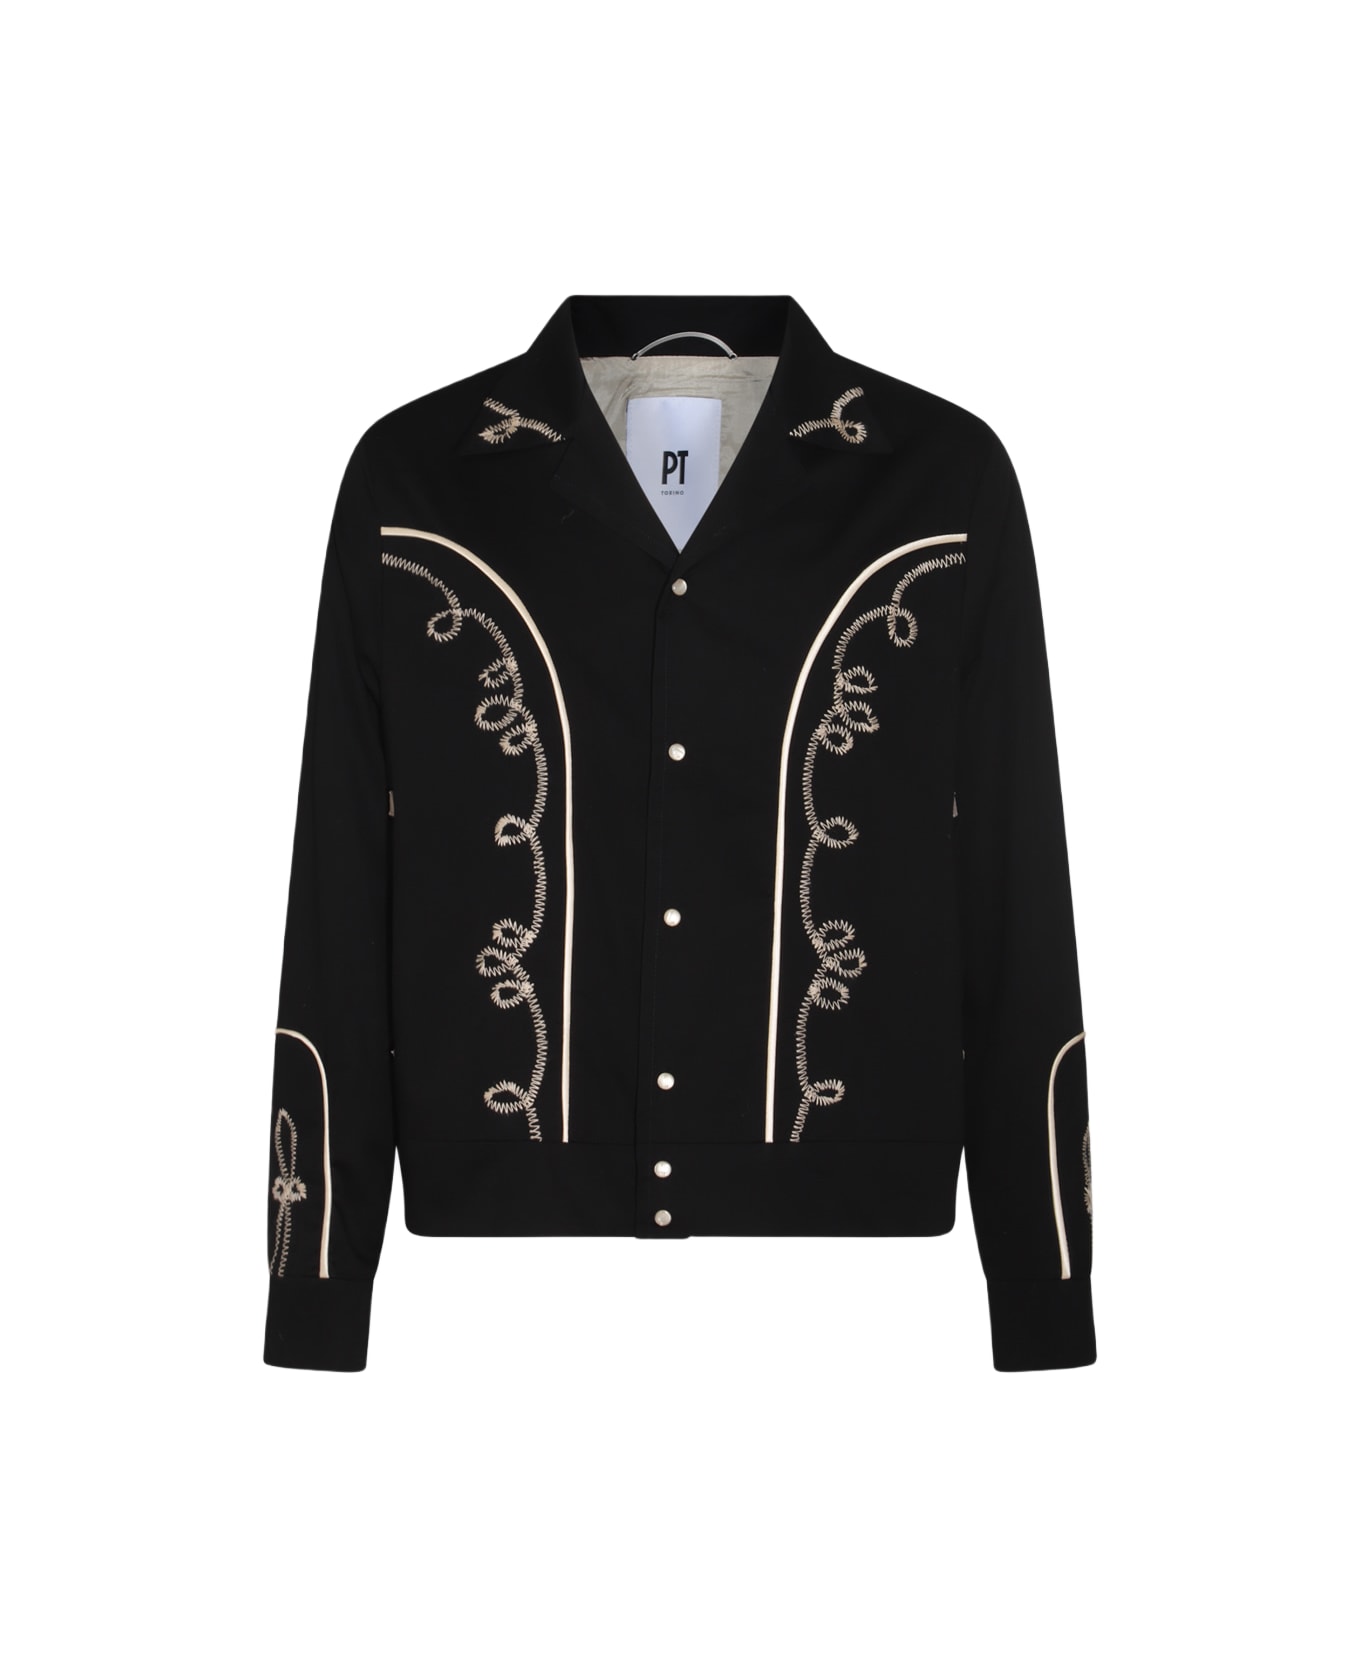 PT Torino Black Cotton Casual Jacket - Black